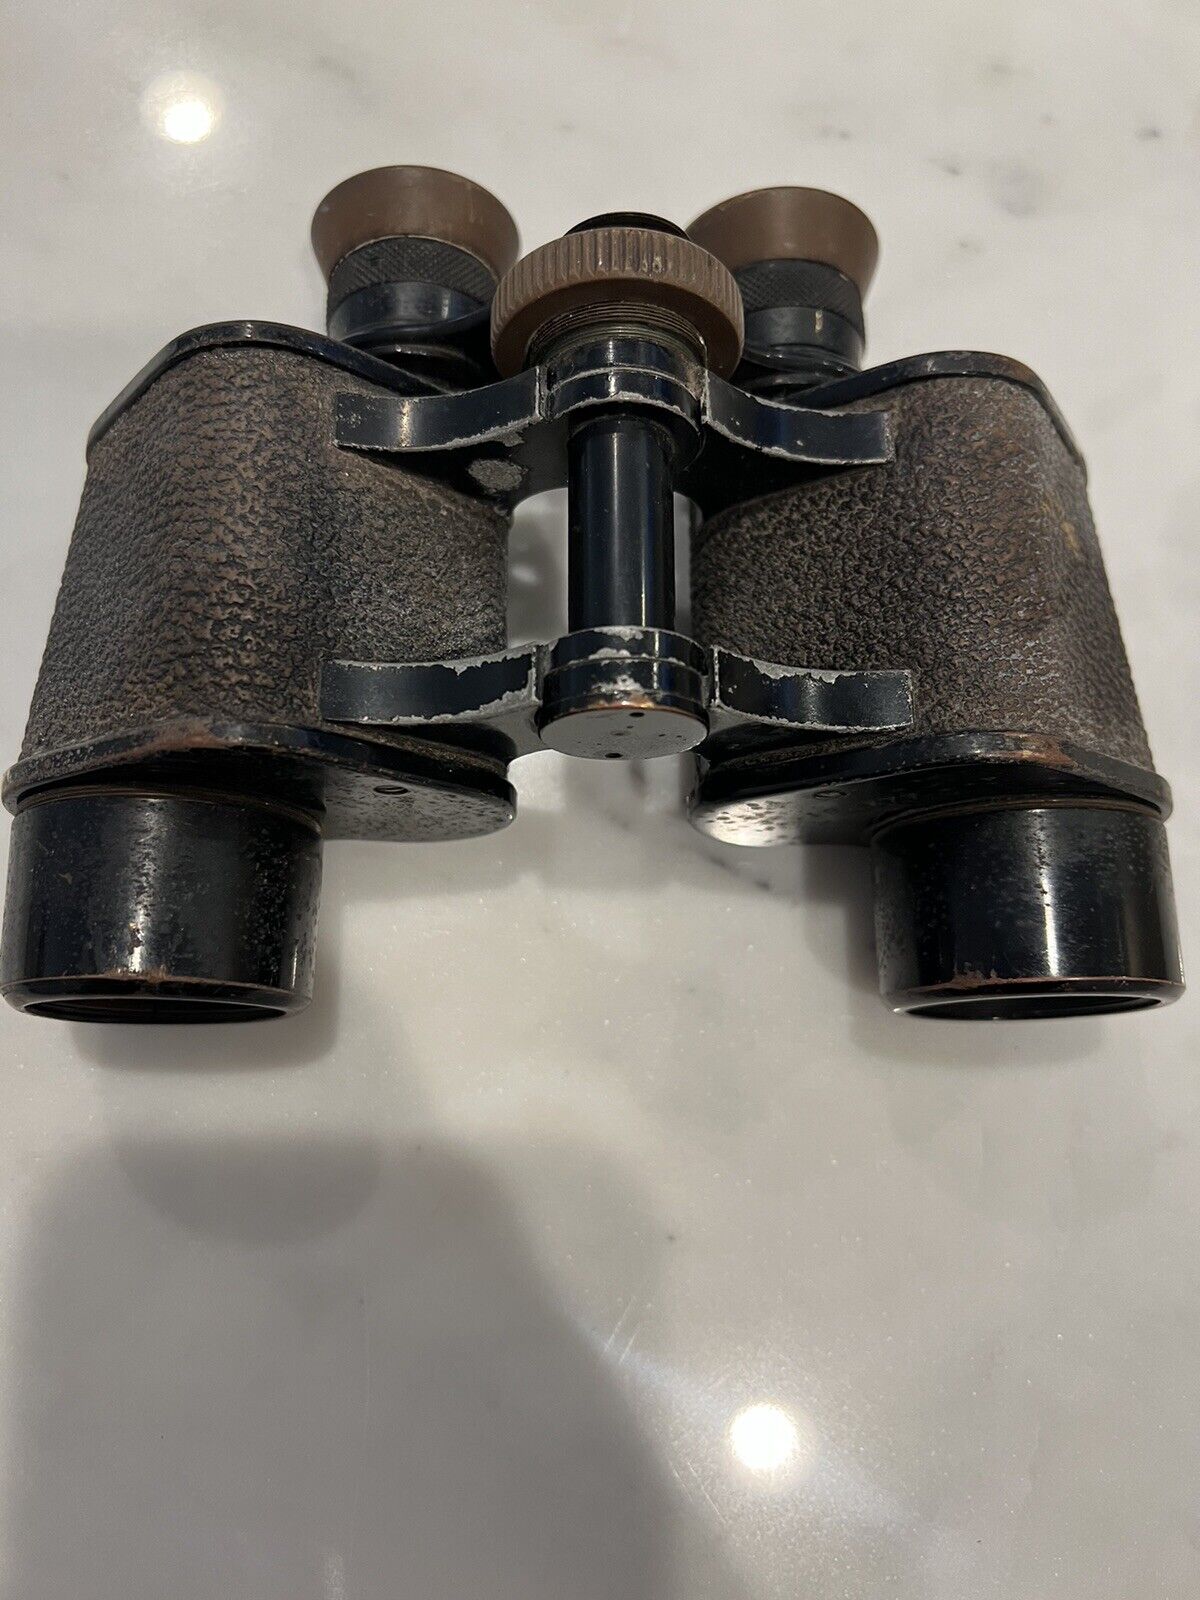 Binoculars, Bausch and Lomb Circa 1908 - 1915